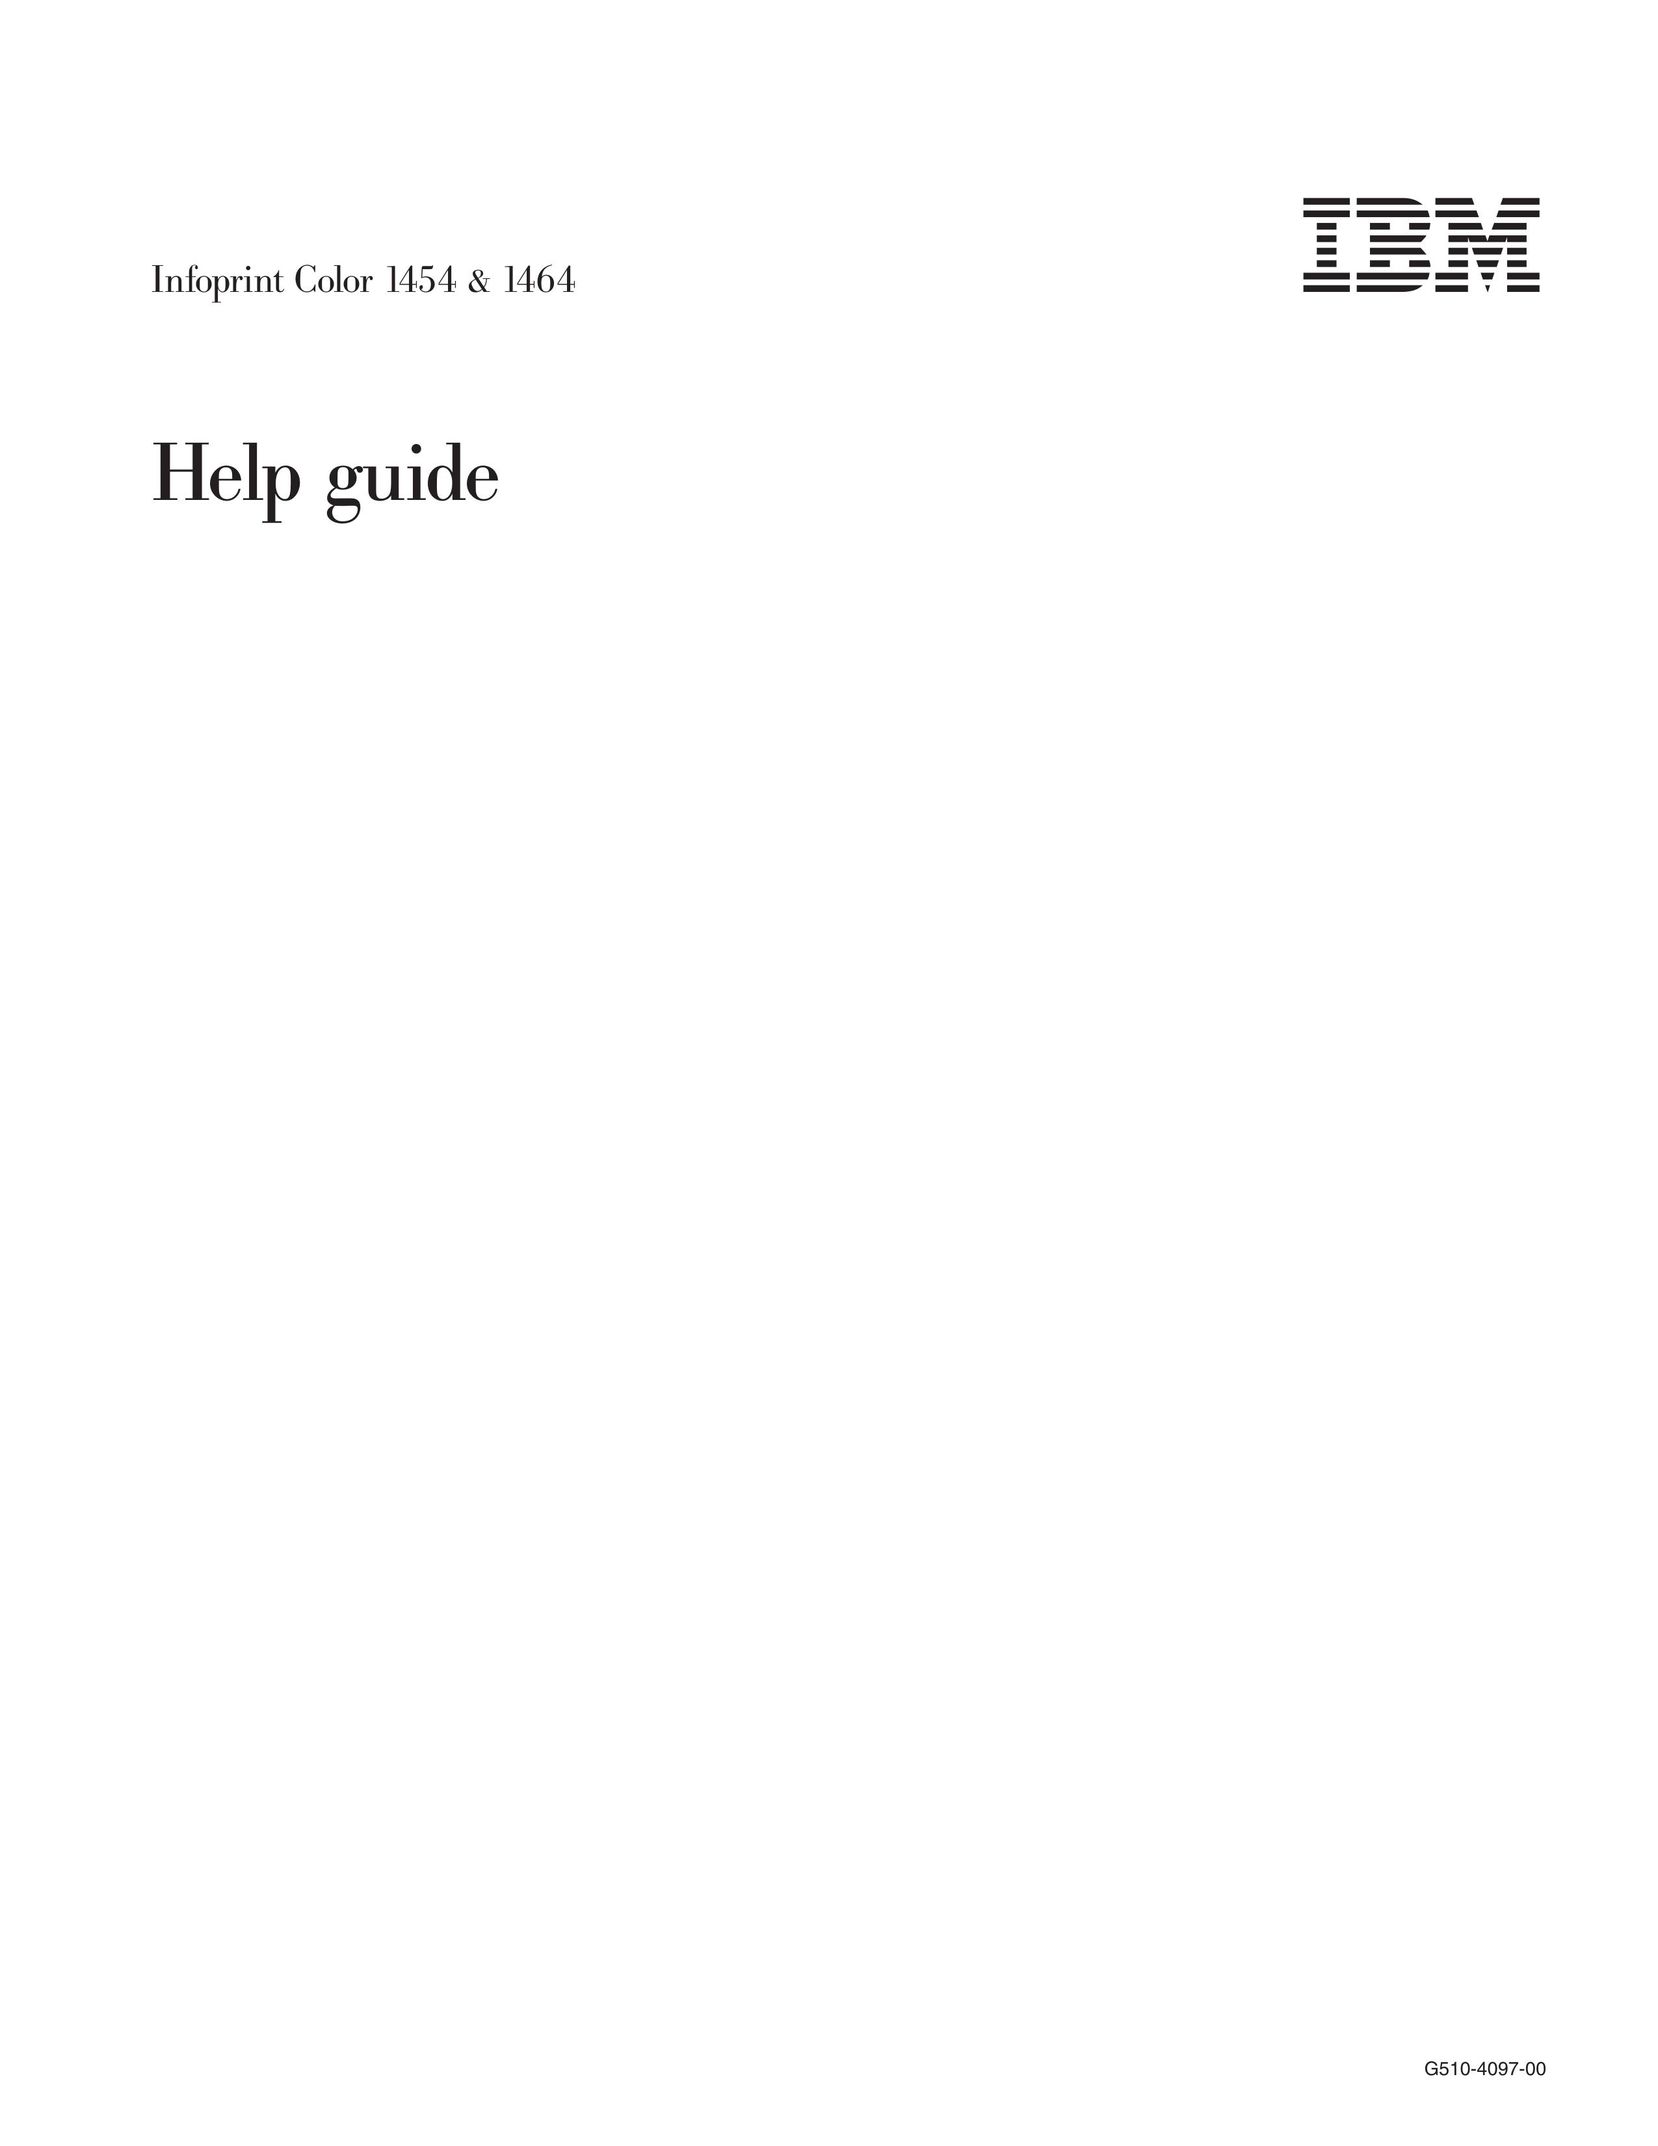 IBM 1464 Printer User Manual